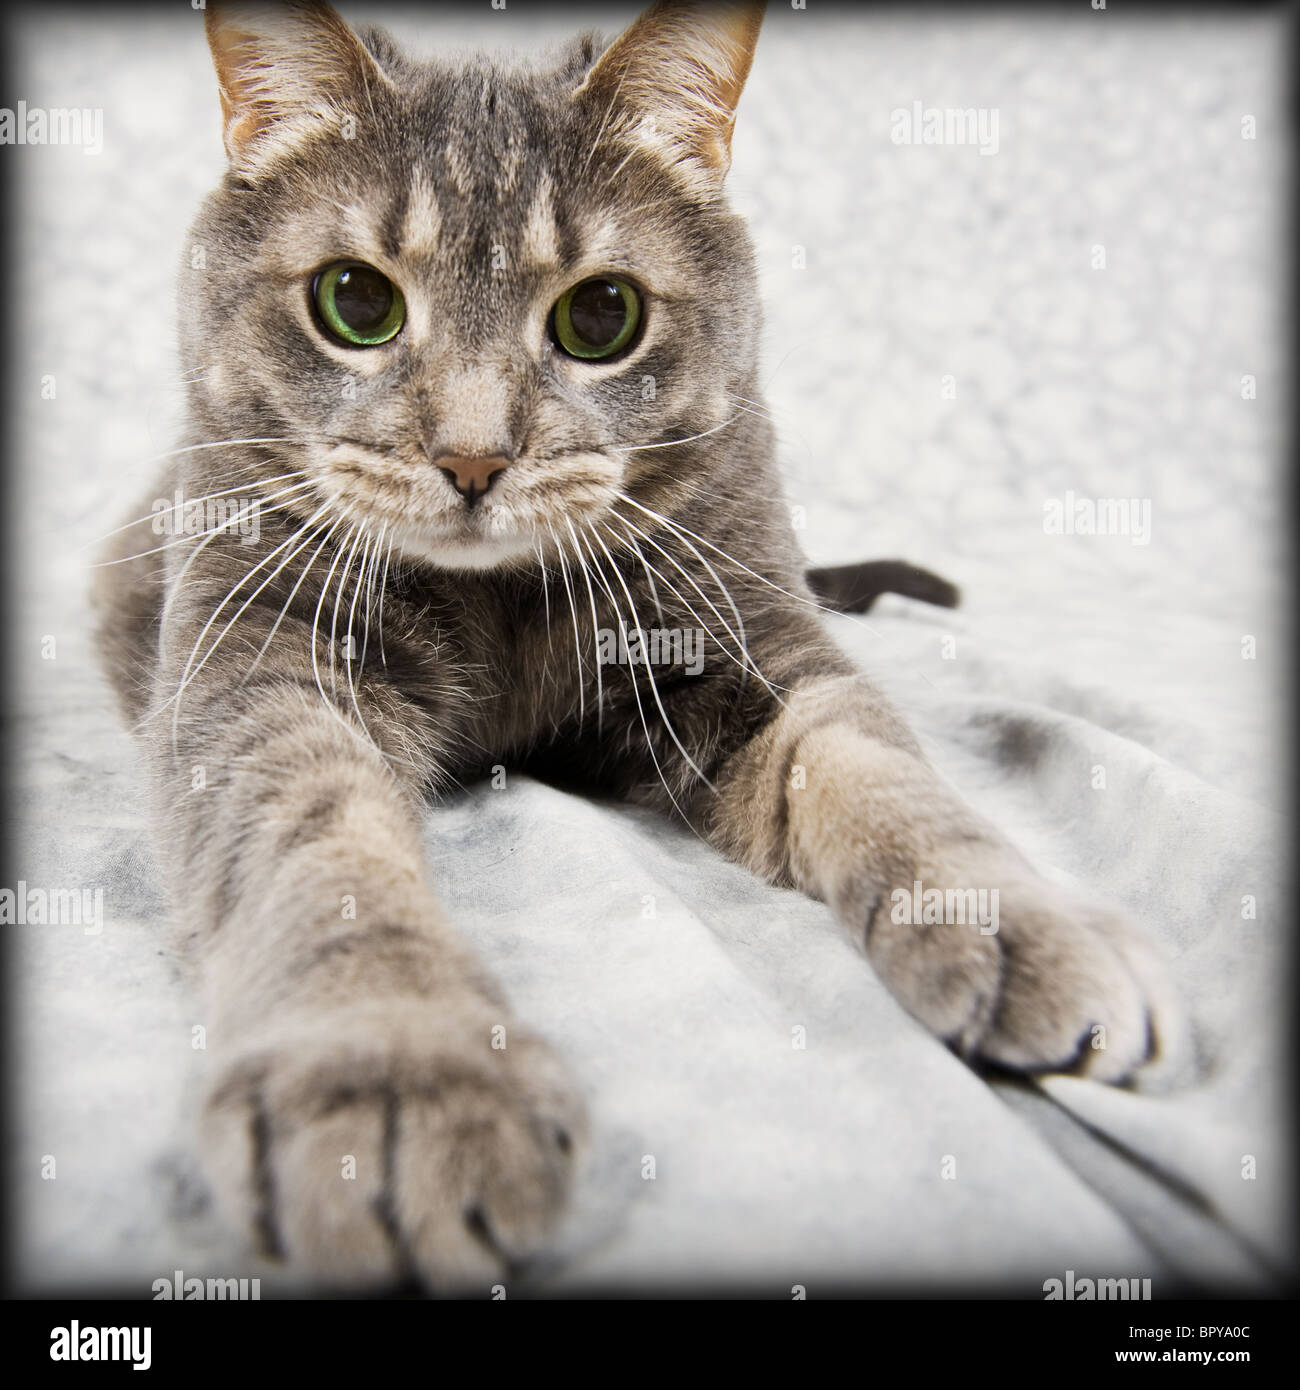 Retrato de un gato atigrado interno Foto de stock